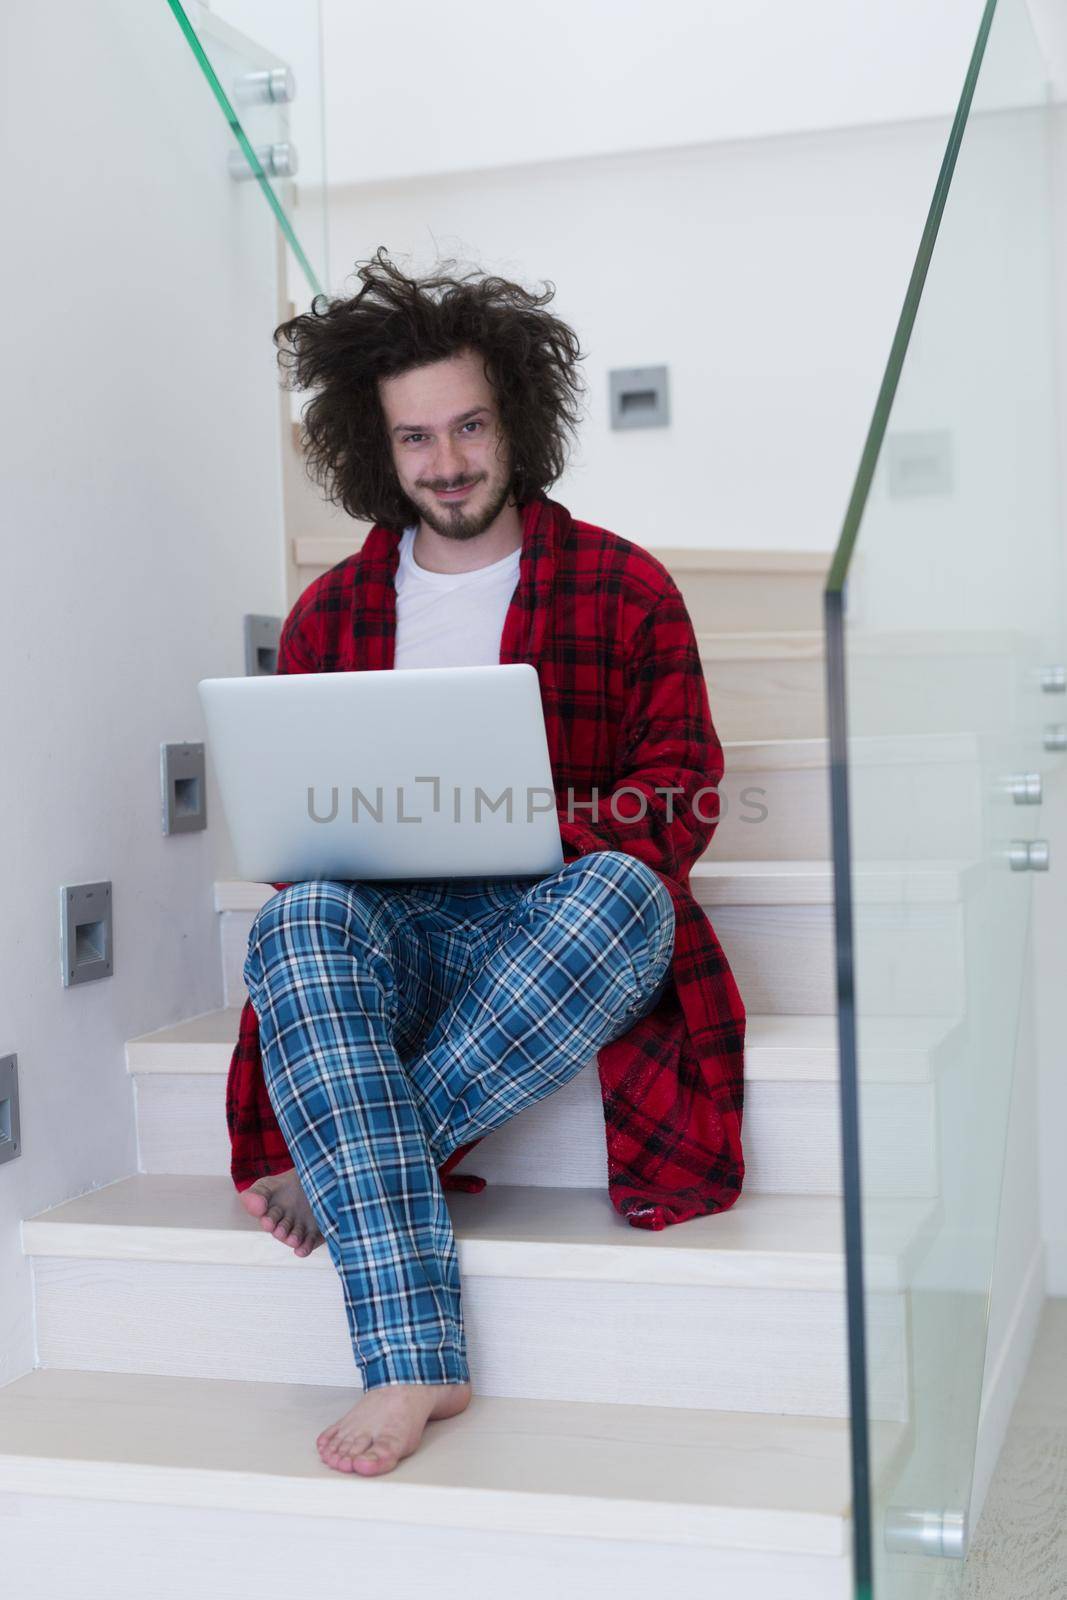 freelancer in bathrobe working from home by dotshock